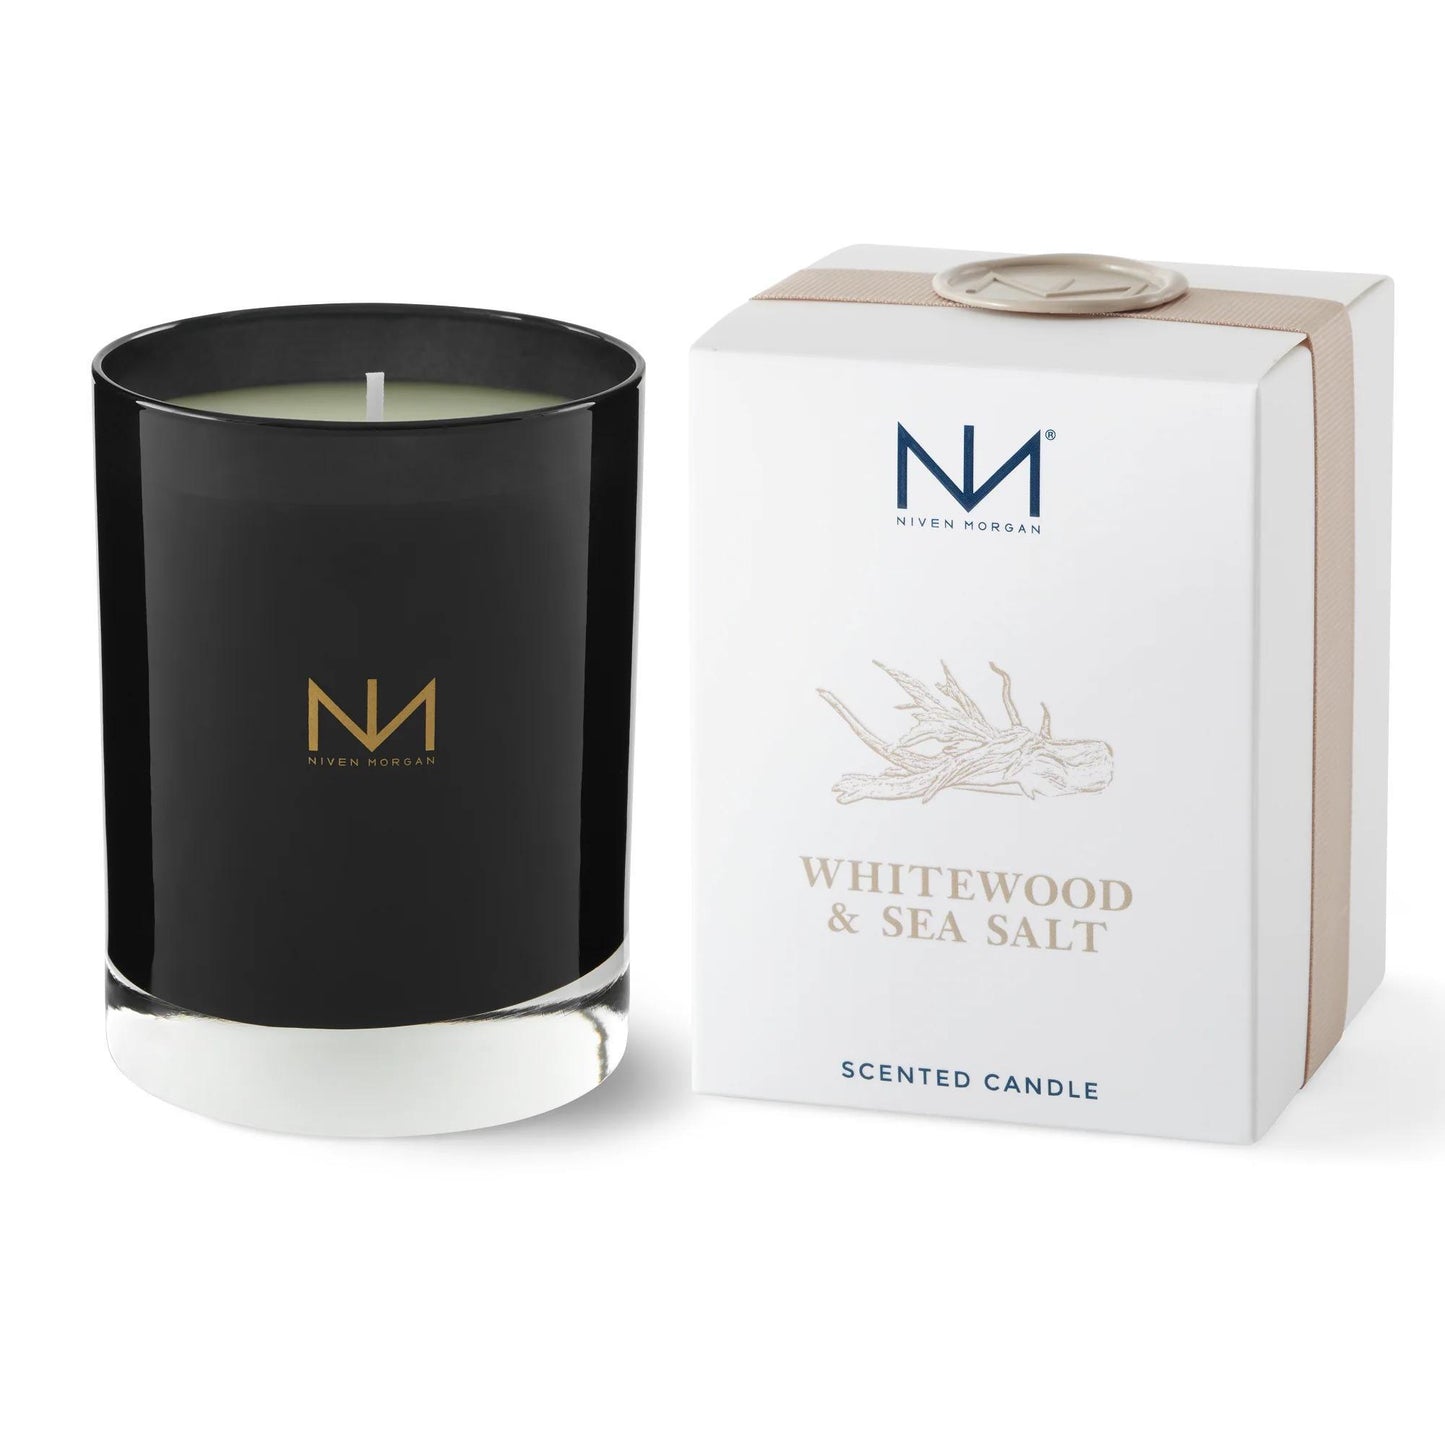 NM Whitewood & Sea Salt Candle 11oz